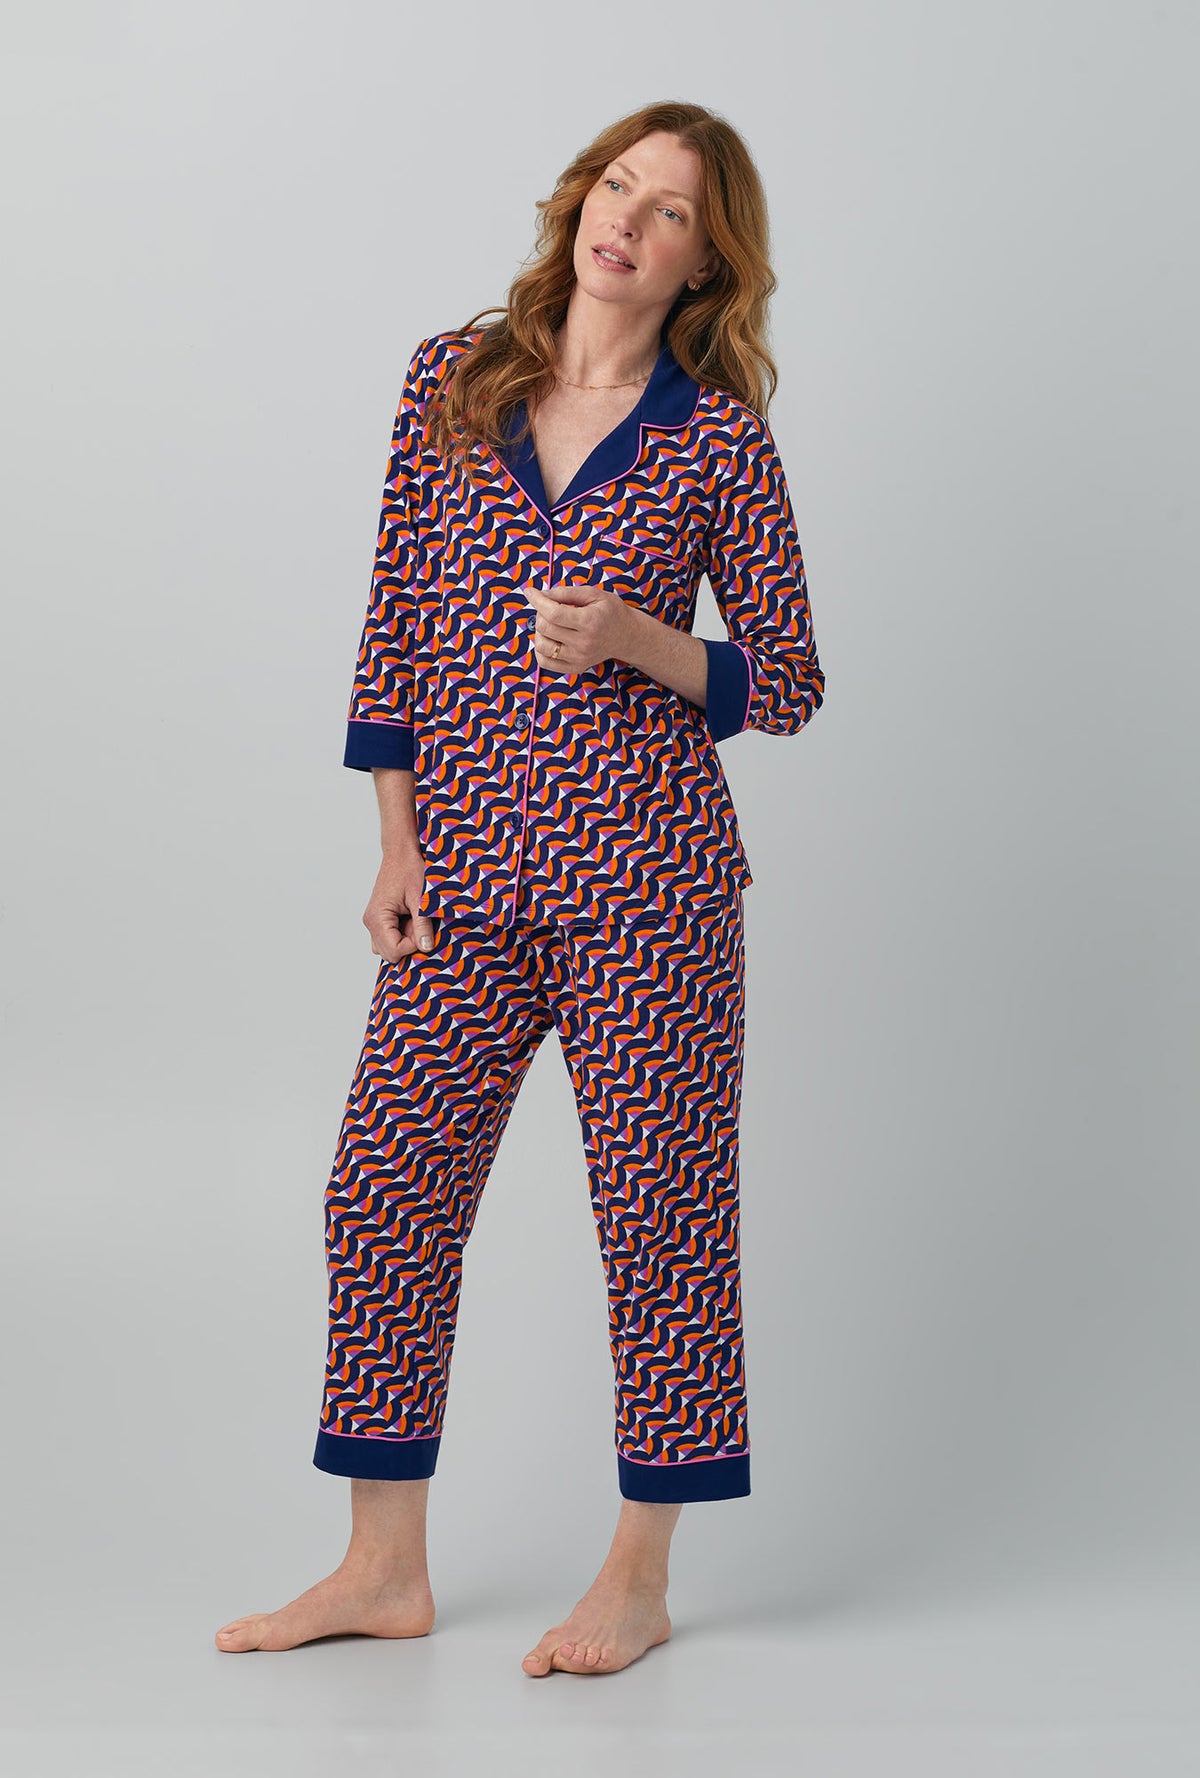 A lady wearing Geo Rainbow 3/4 Sleeve Classic Stretch Jersey PJ Set